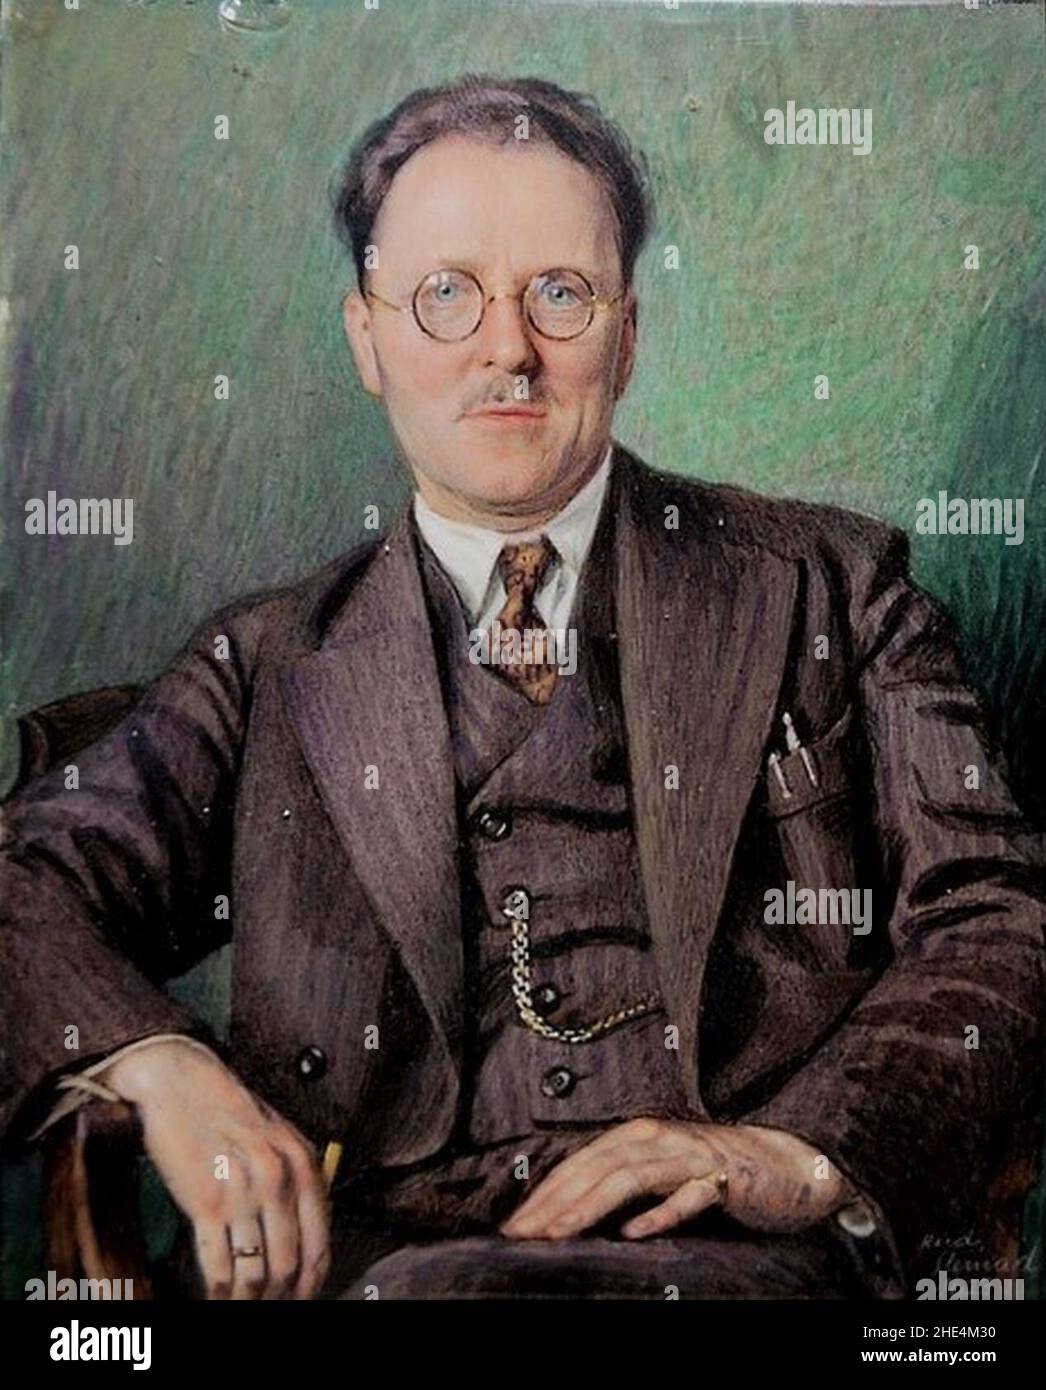 Rudolf Sternad - Portrait des Oberingenieurs Kübler, Fa. Adam Opel, Rüsselsheim, 1928. Stock Photo